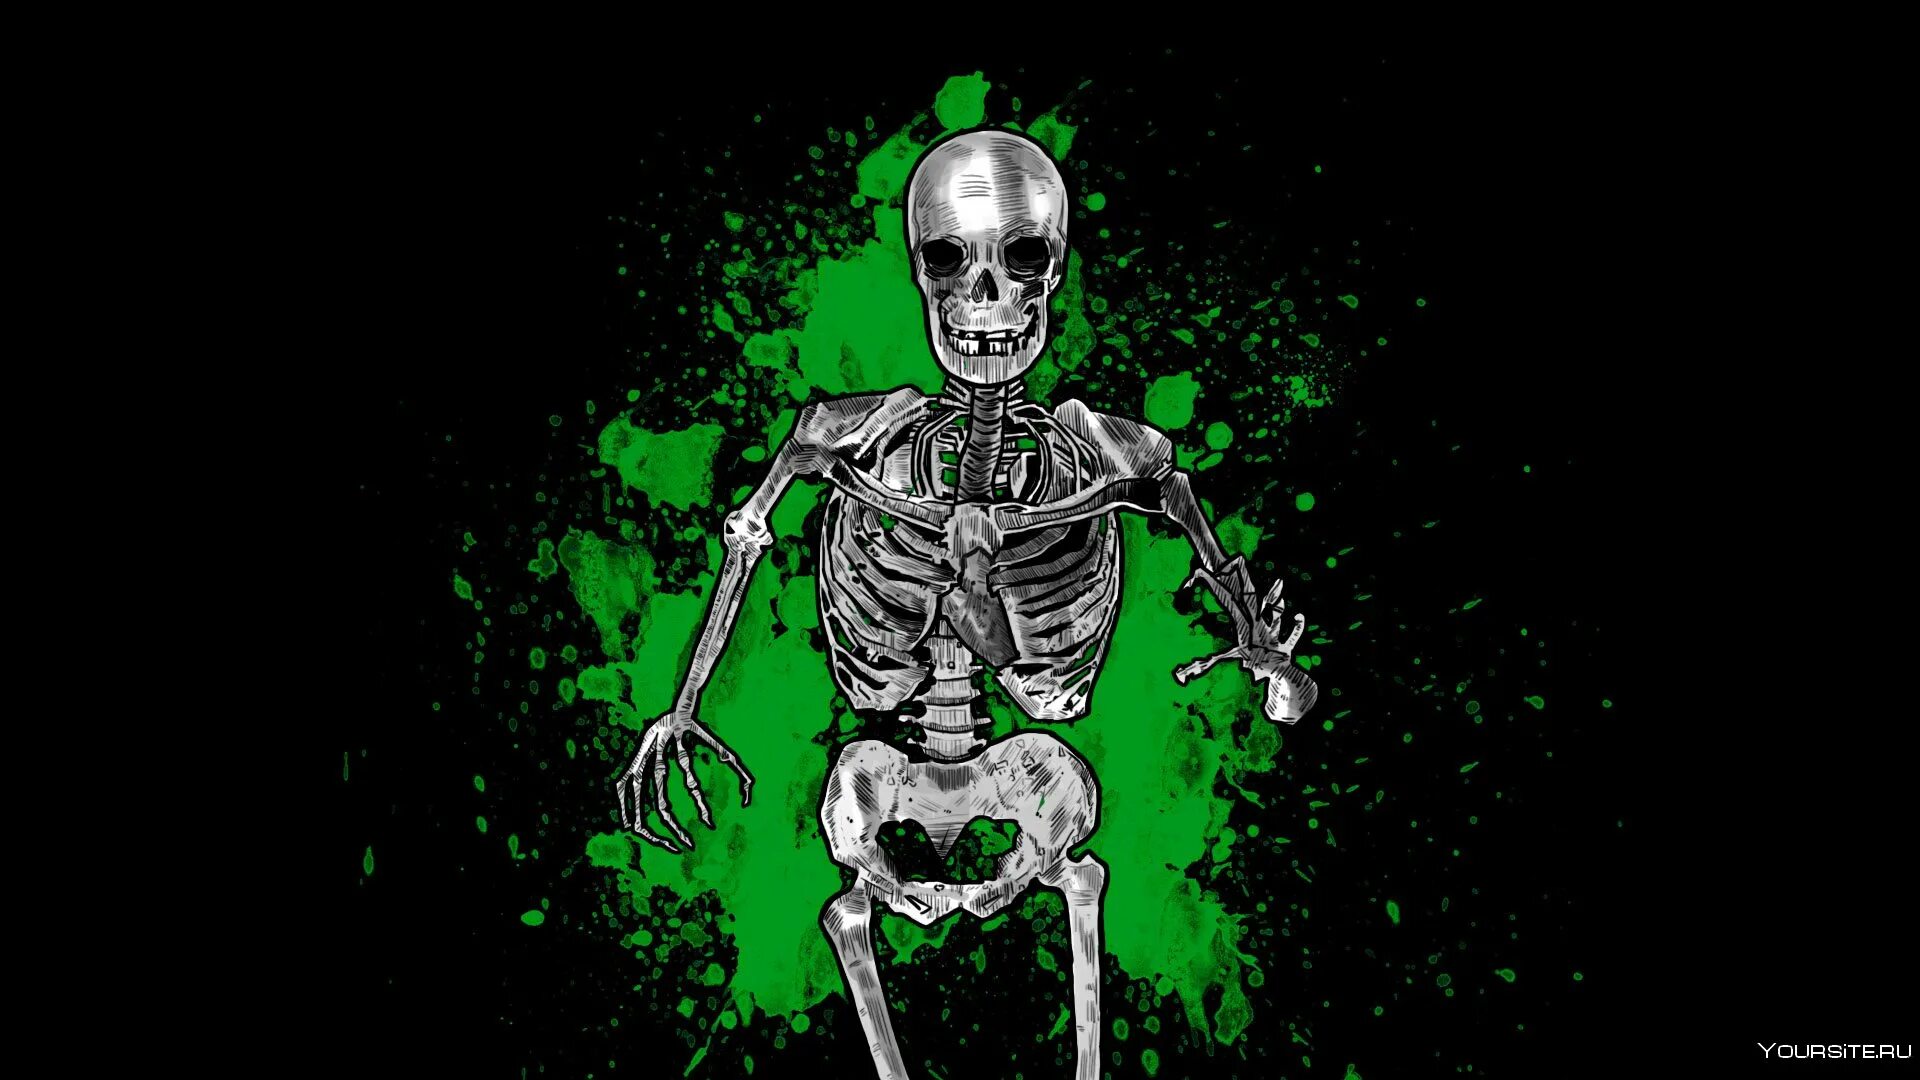 Скелеты на заставку. Картинки на рабочий стол скелеты. Скелет на черном фоне. Зеленый скелет. Заставка скелета